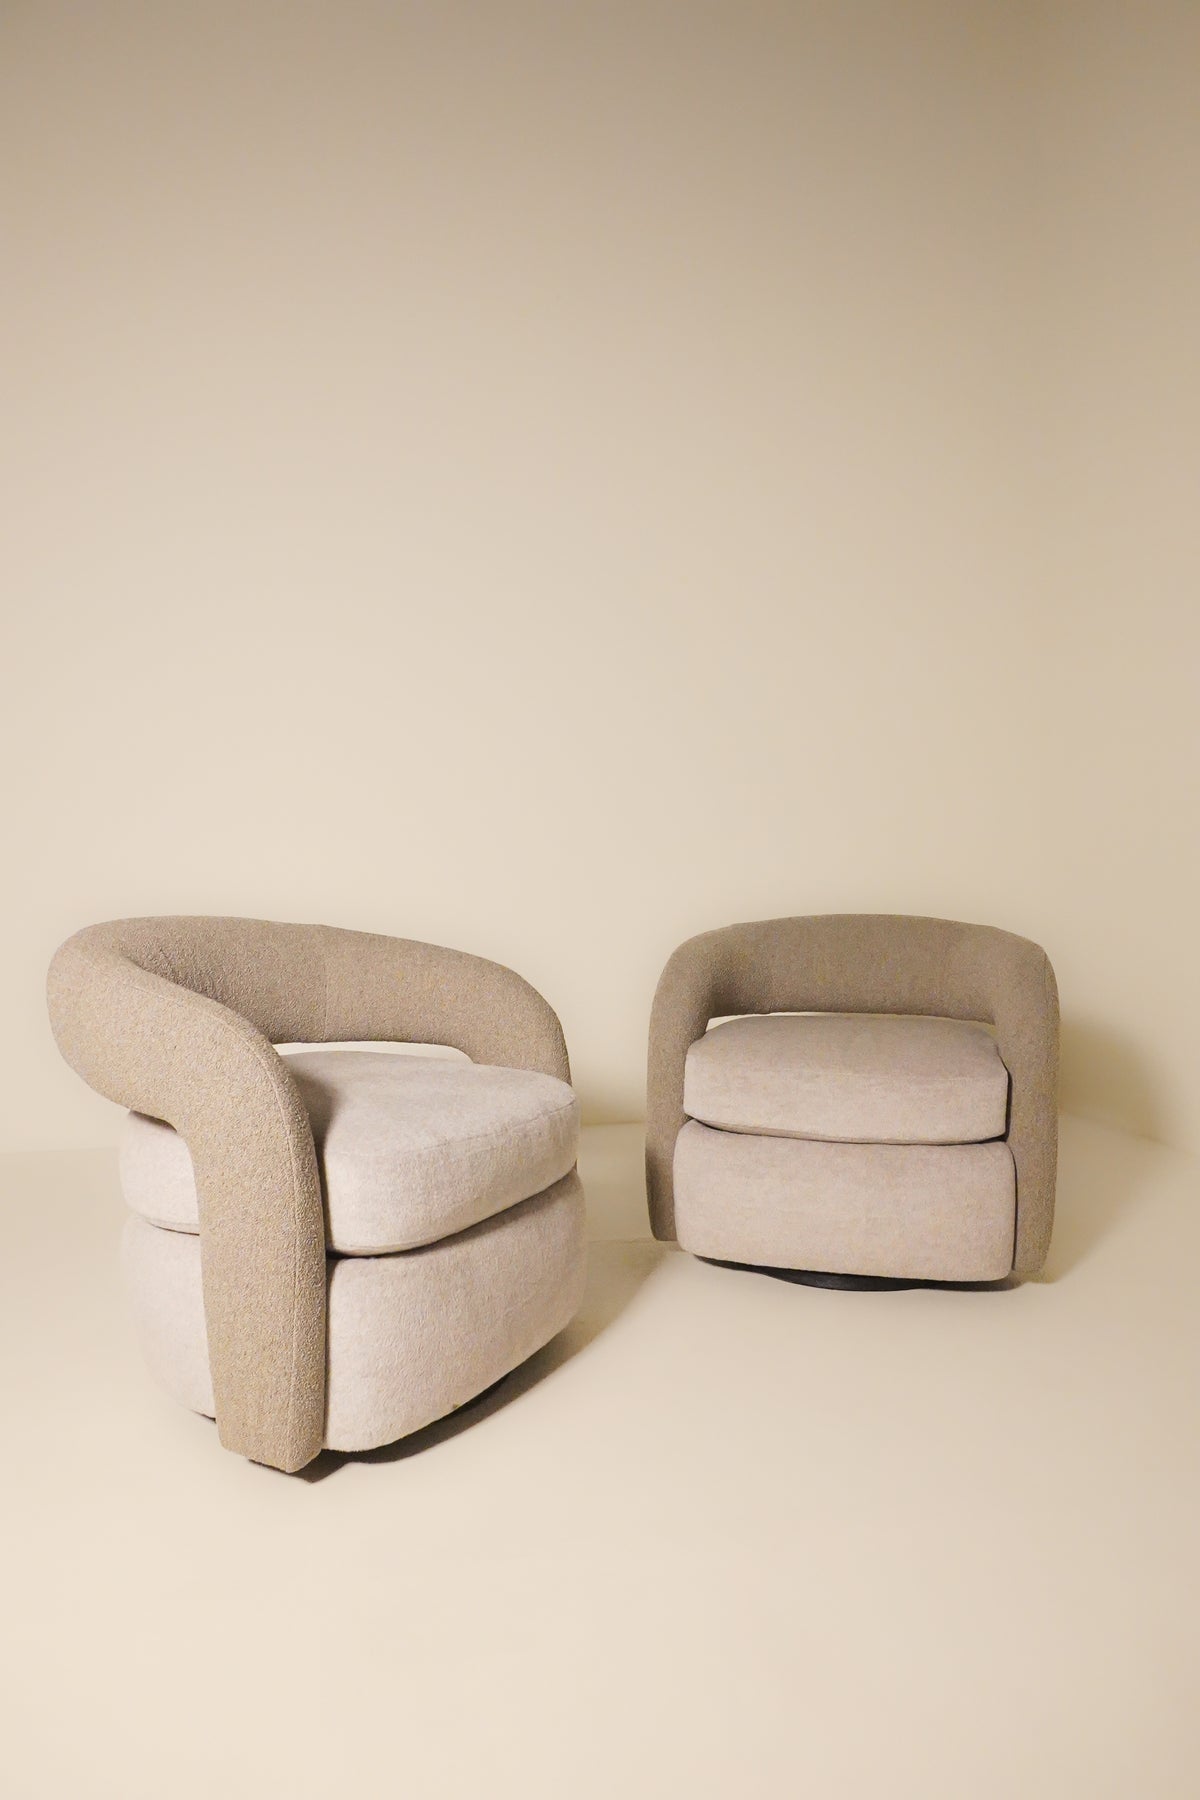 Pair of Weiman "Targa" Swivel Lounge Chairs